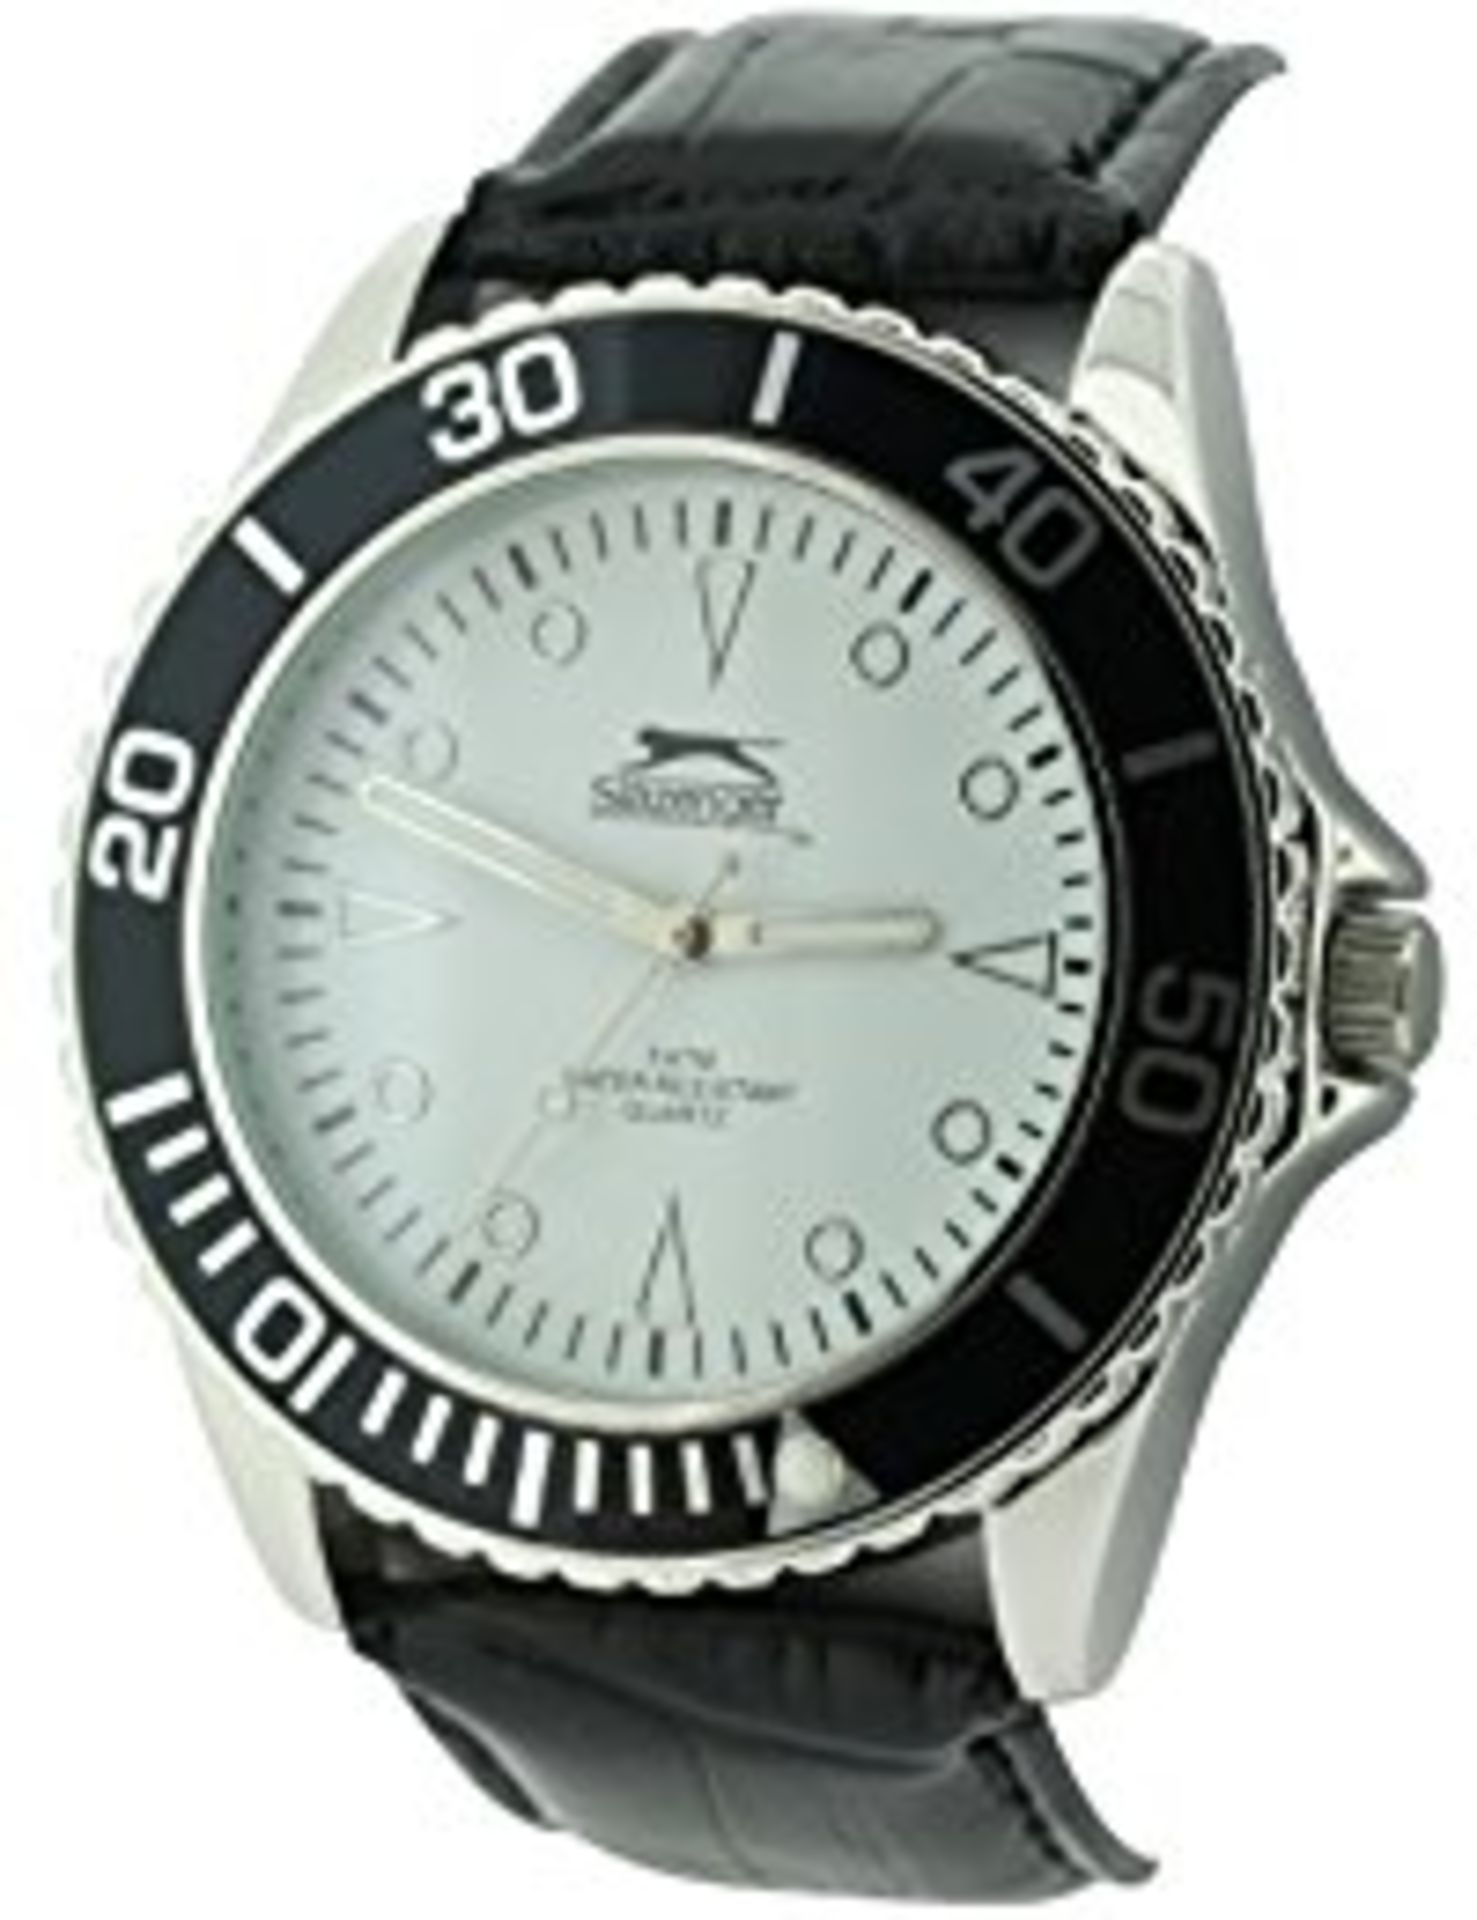 V Brand New Gents Slazenger Quartz Watch - White Dial Analogue Display & Black PU Strap